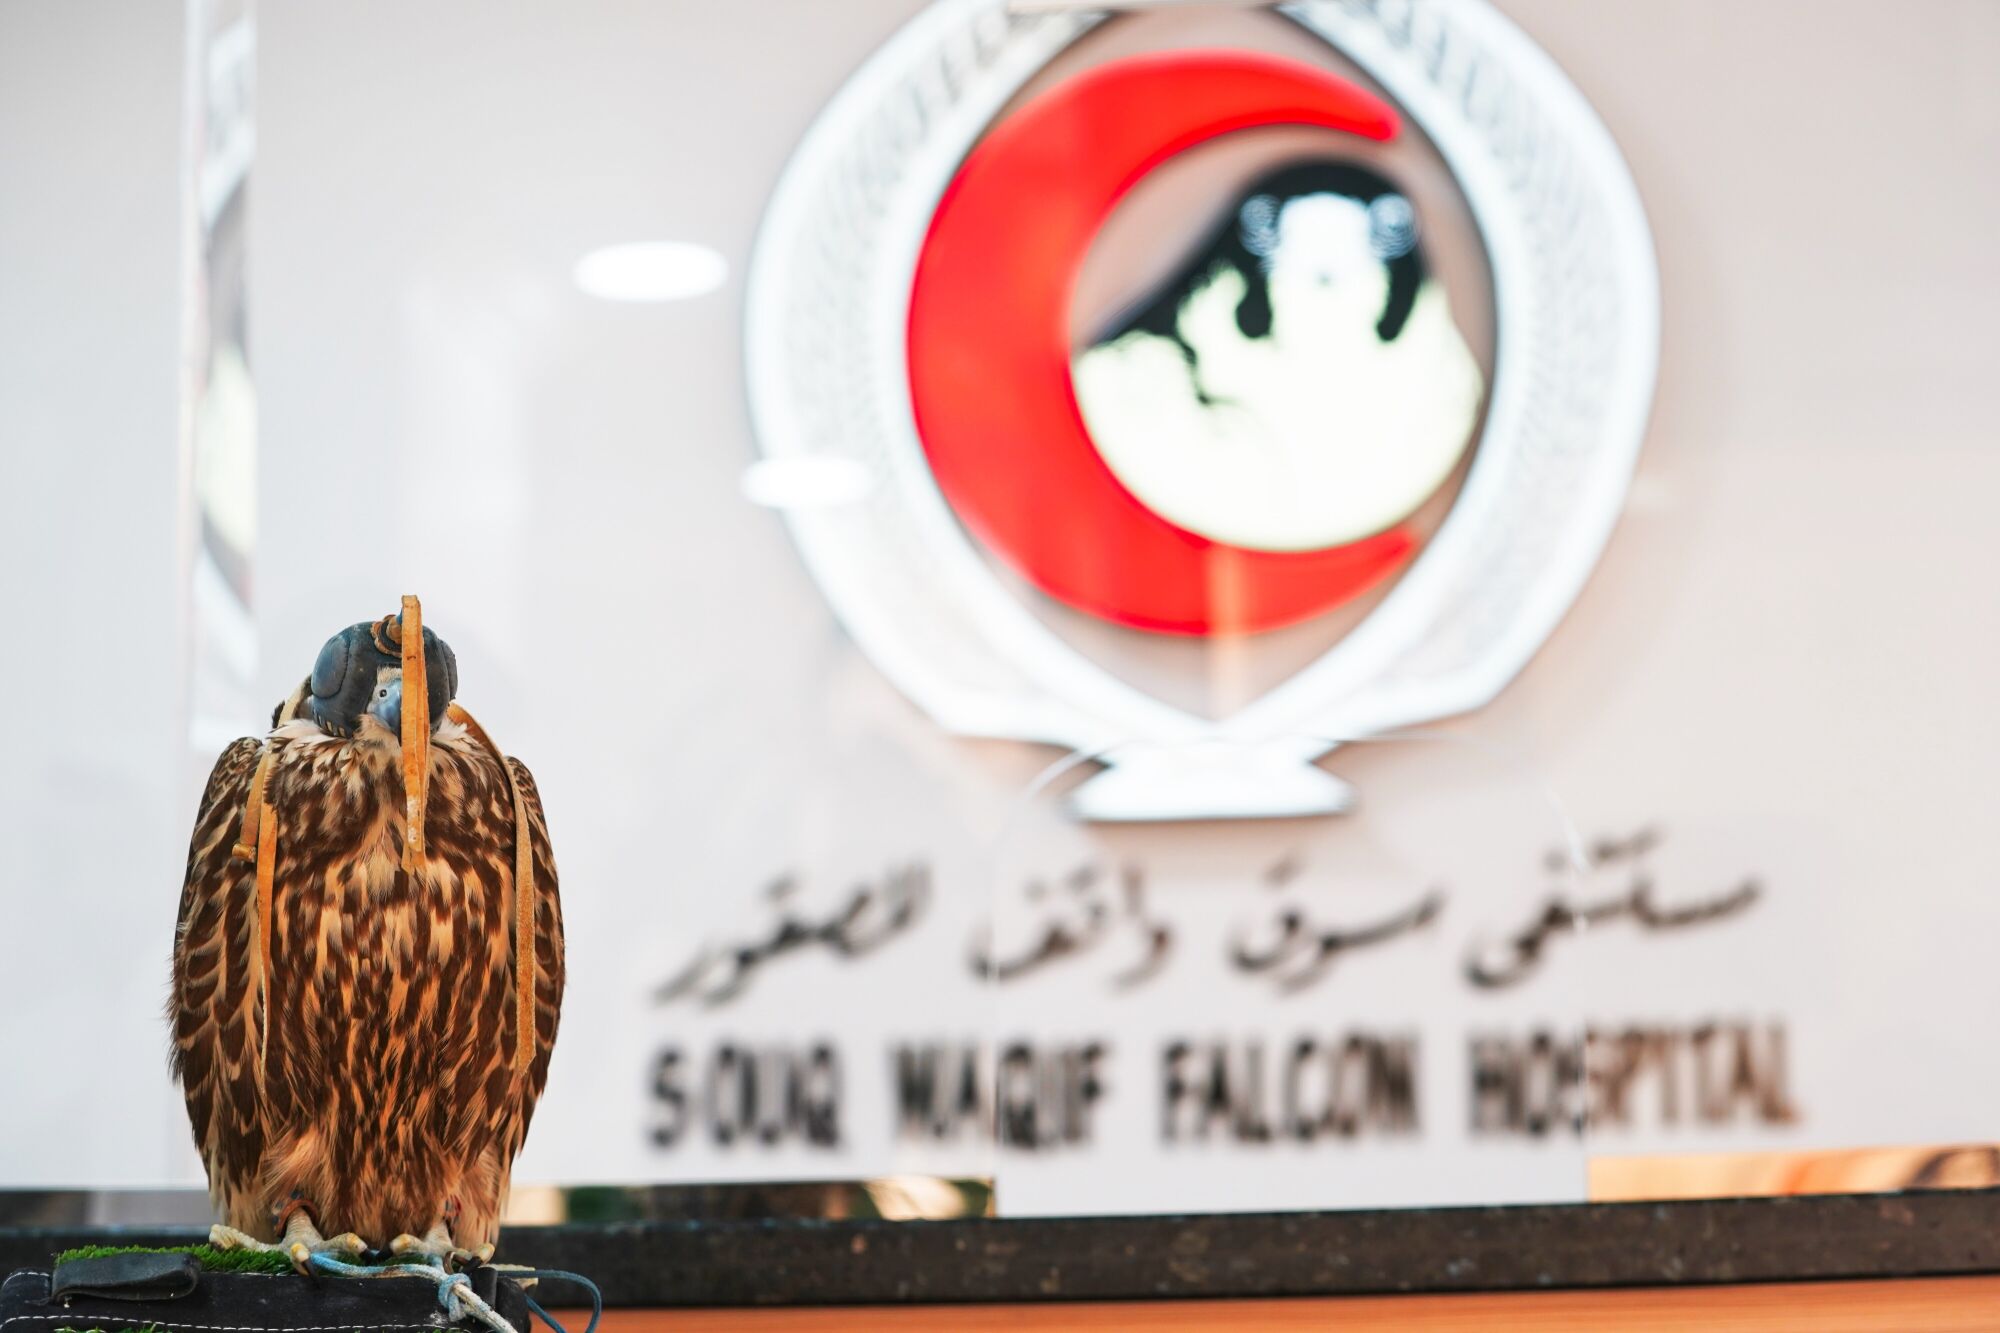 A peregrine falcon awaits a procedure at the Souq Waqif Falcon Hospital.